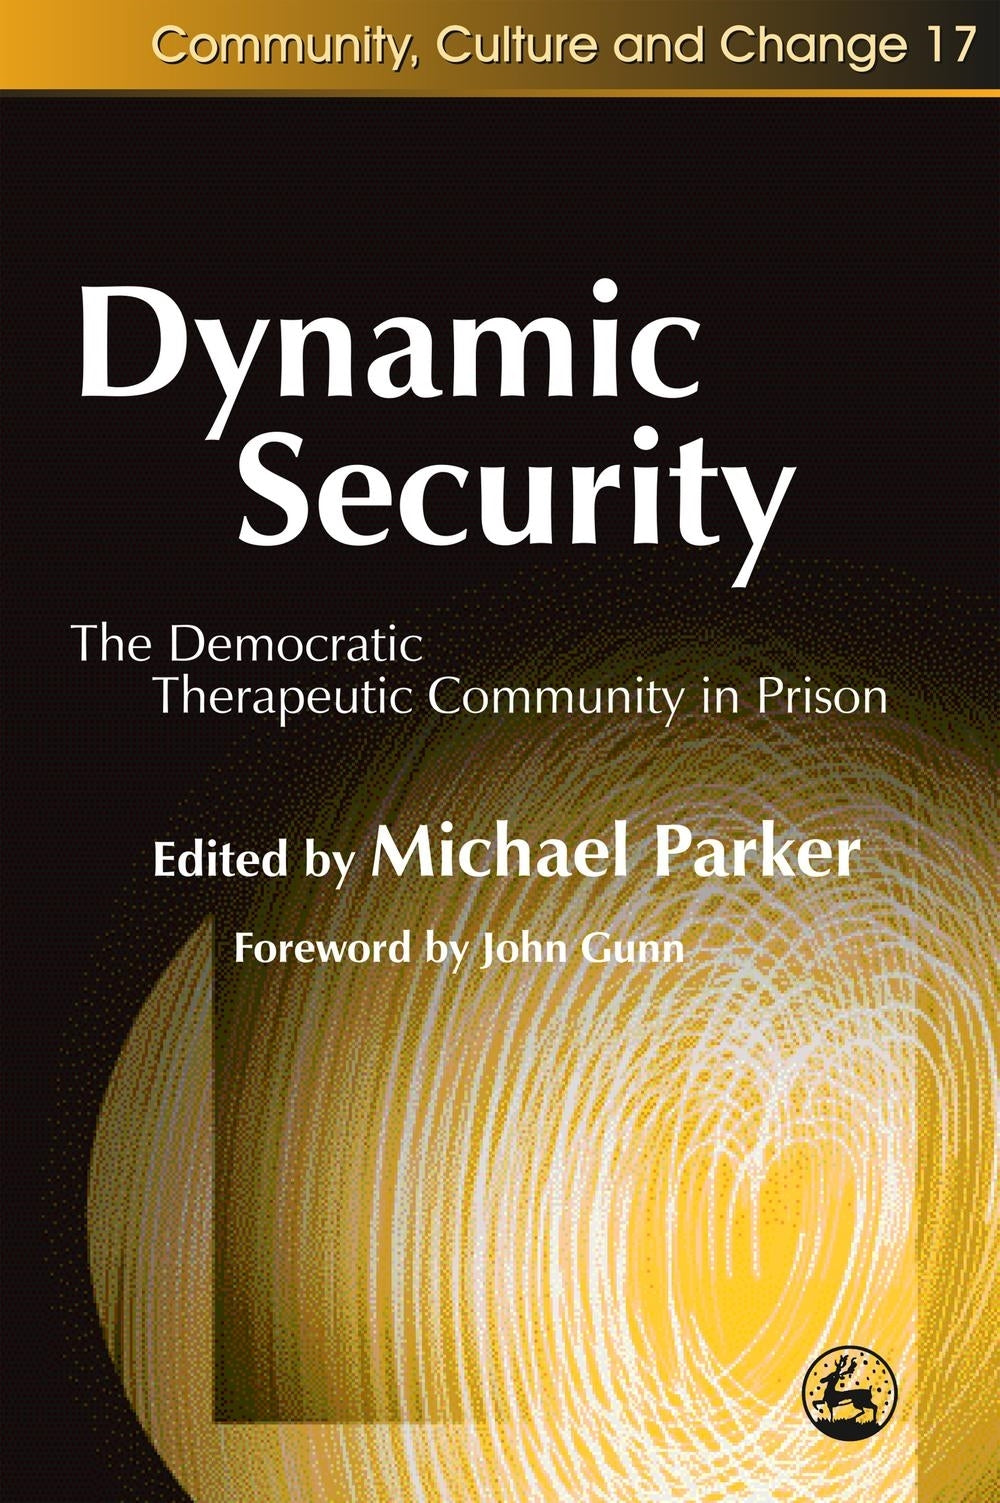 Dynamic Security by Michael Parker, John Gunn